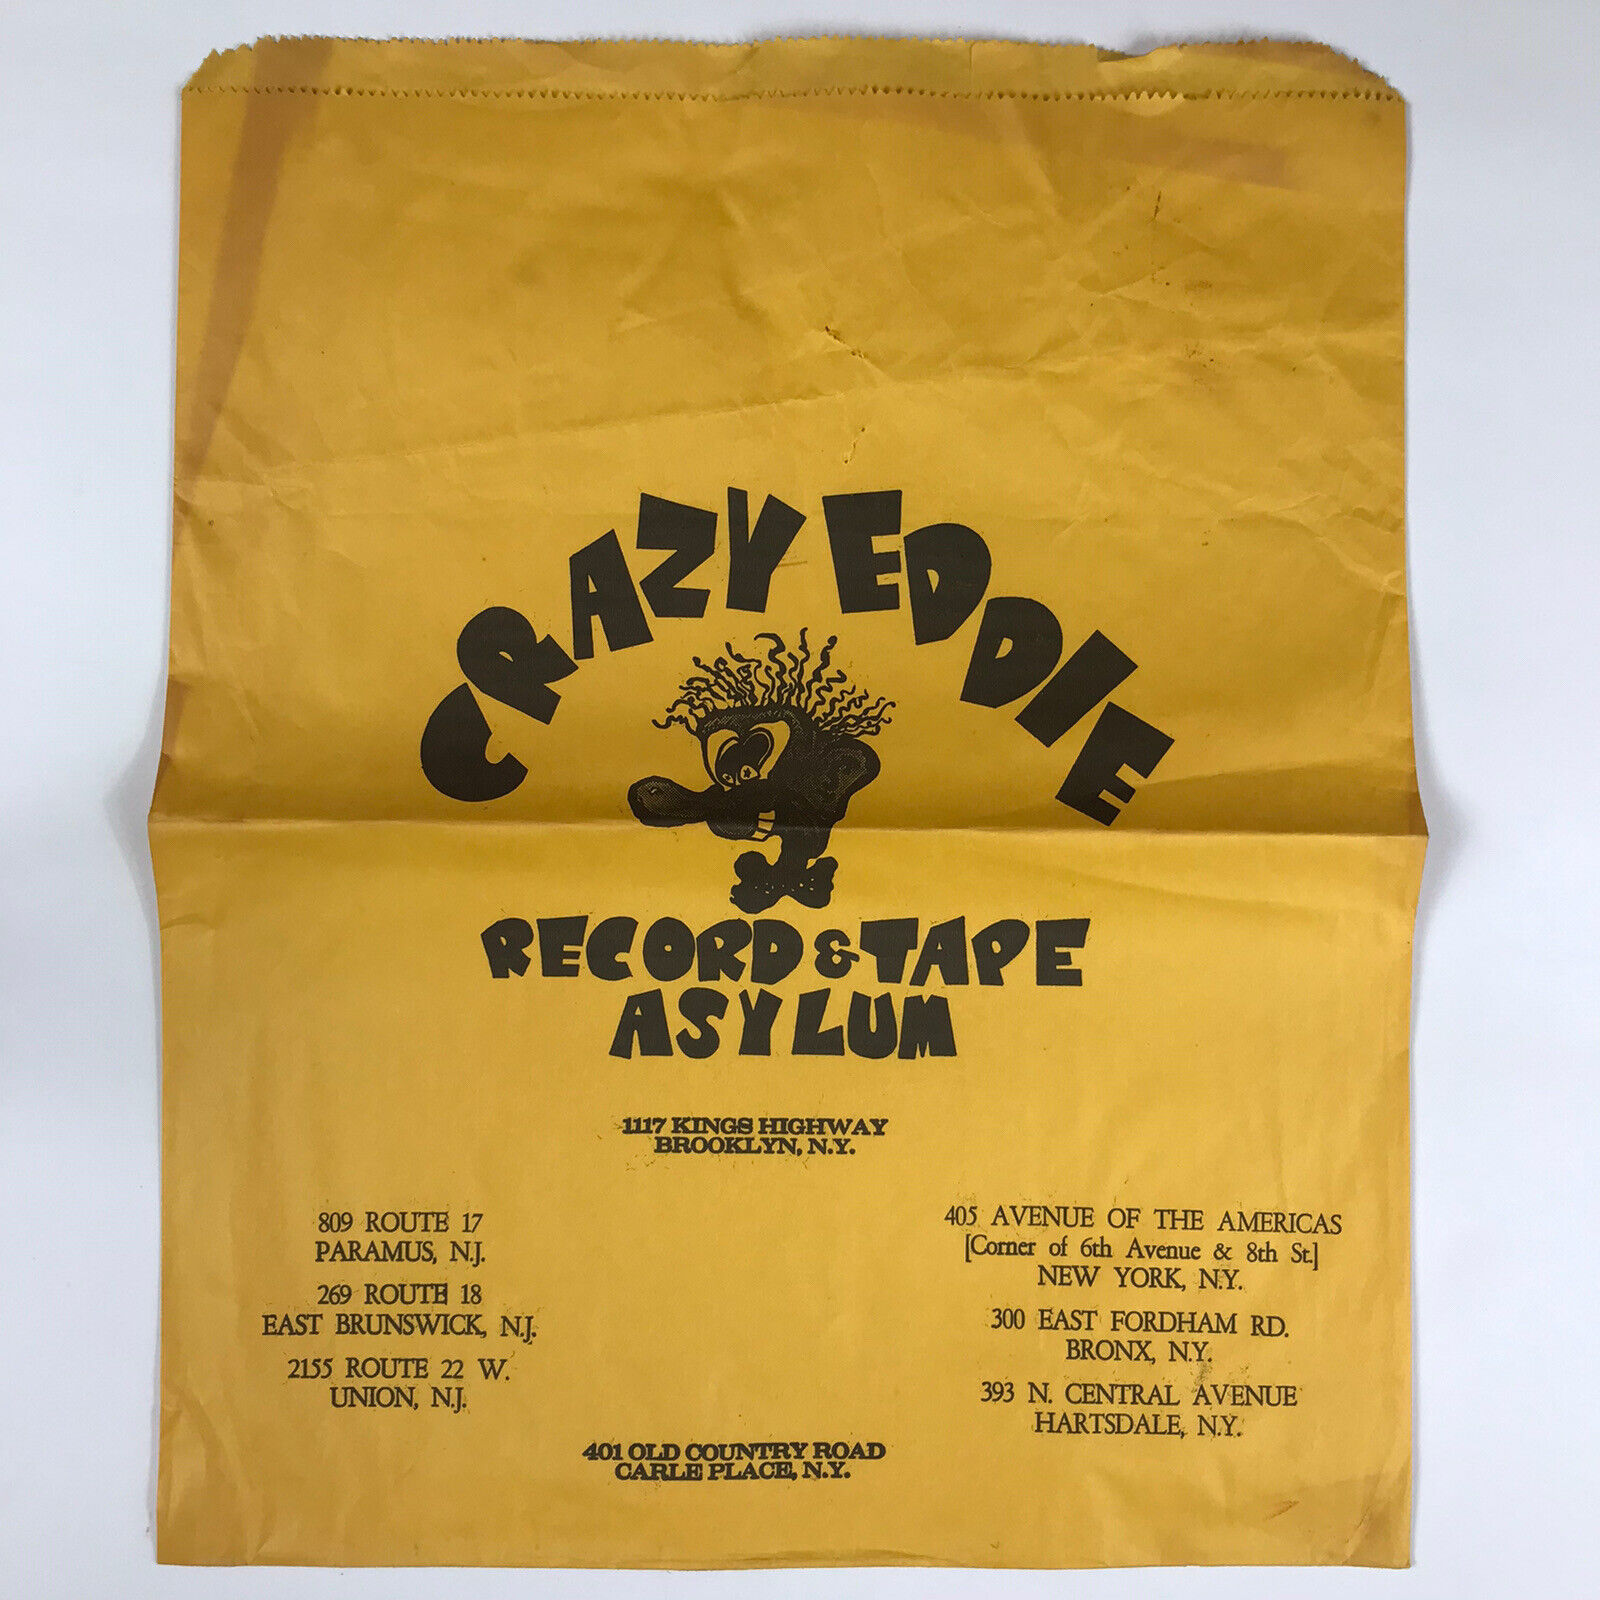 Vintage Crazy Eddie Record & Tape Asylum Paper Shopping Bag 1970s 18 x 15, NYC